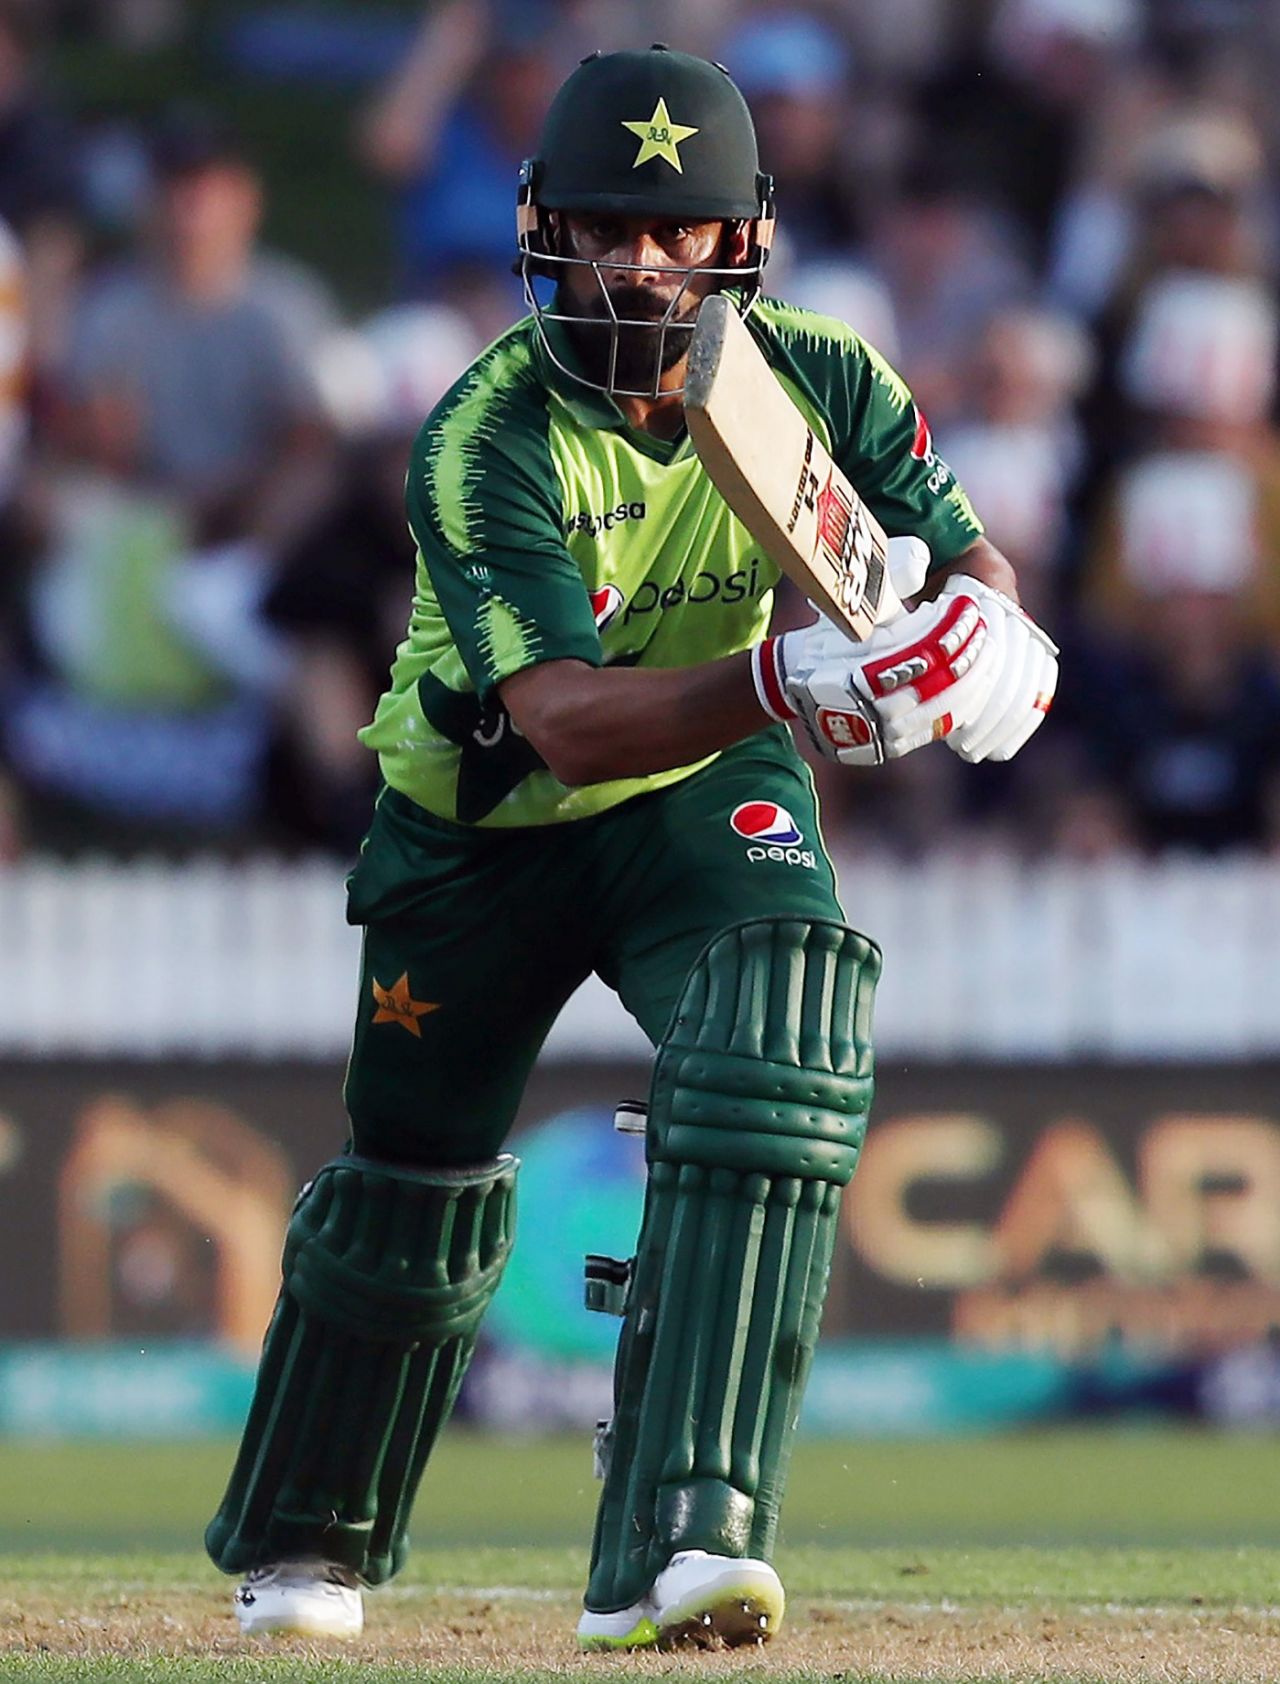 Mohammad Hafeez hit a quick half-century, New Zealand vs Pakistan, 2nd T20I, Hamilton, December 20, 2020